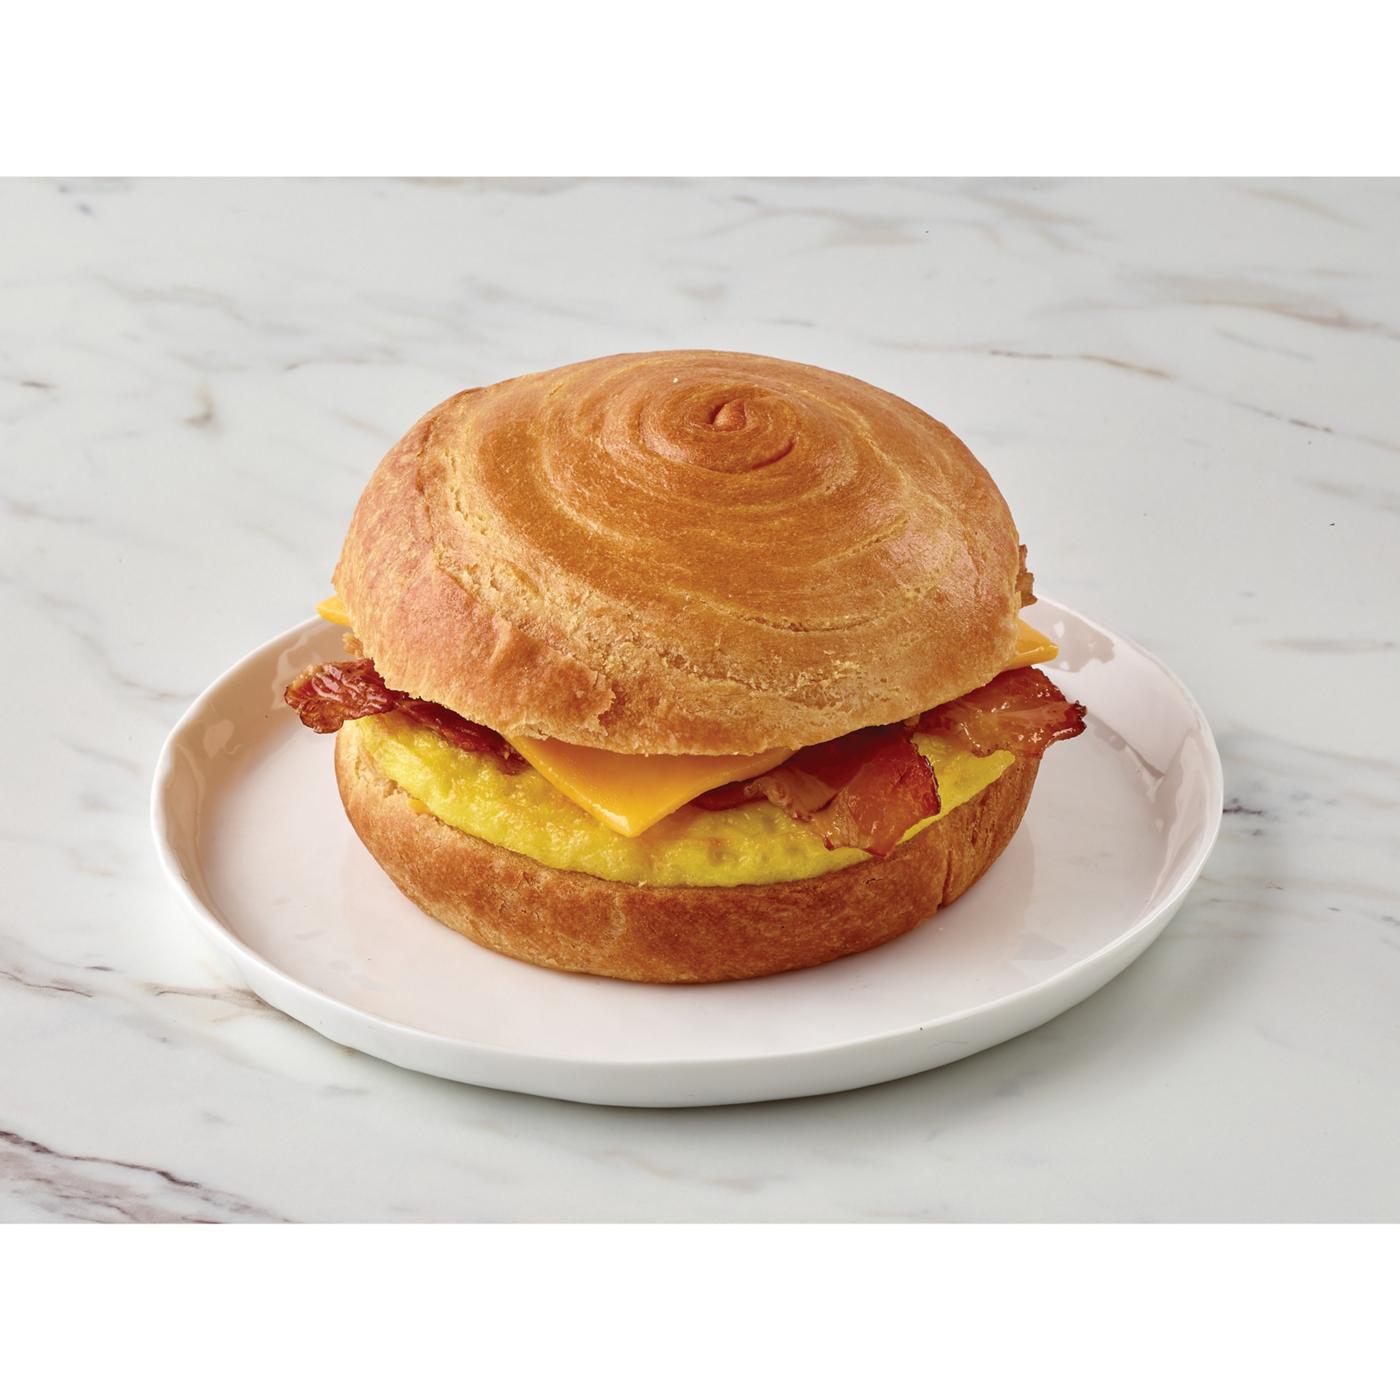 H-E-B Bakery Croissant Breakfast Sandwich - Bacon Egg & Cheese; image 4 of 4